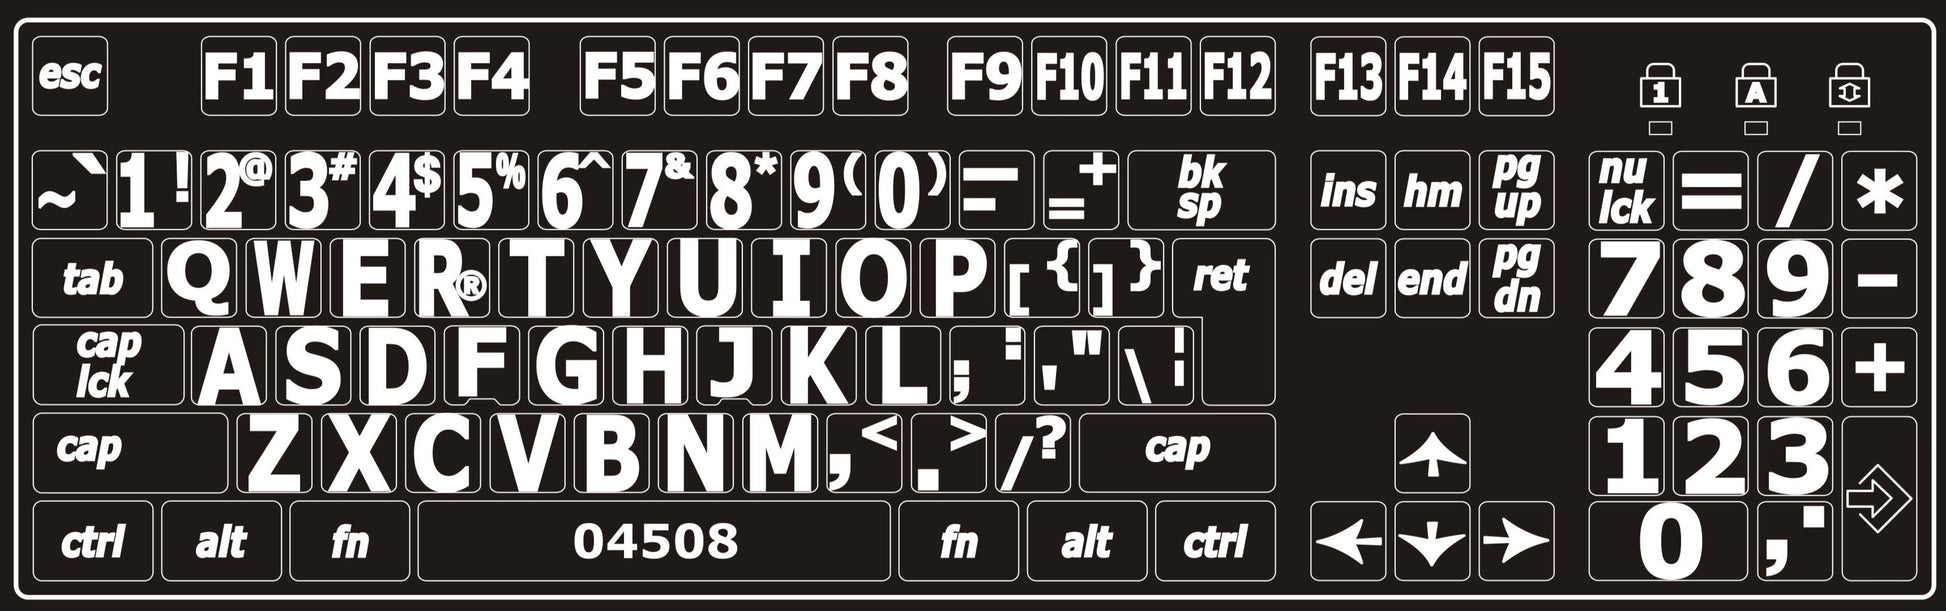 english-us-keyboard-stickers-mac-04508